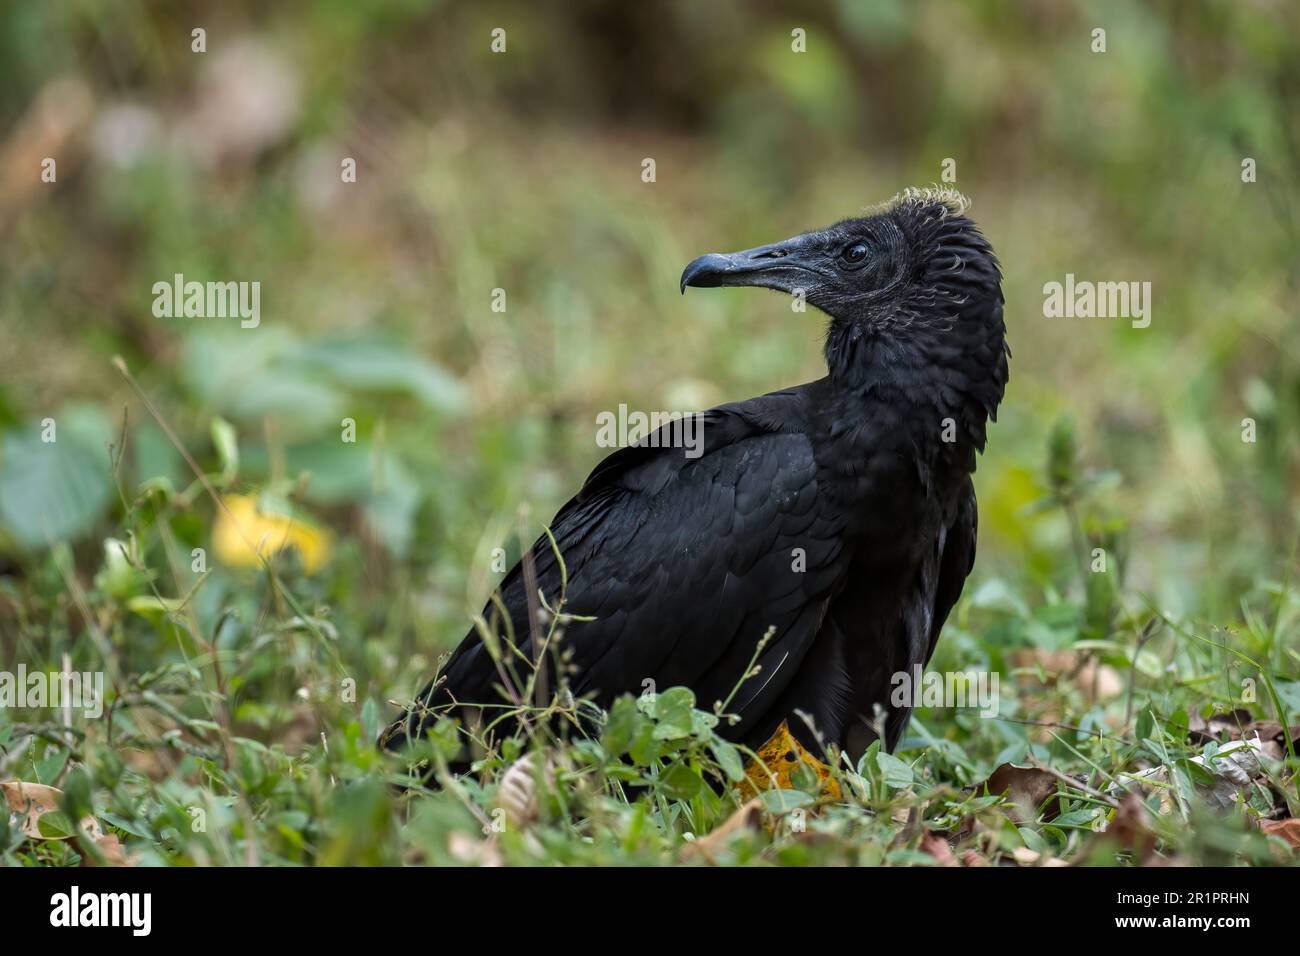 American Black Vulture - Coragyps atratus, black common vulture from Central America forests, Gamboa, Panama. Stock Photo